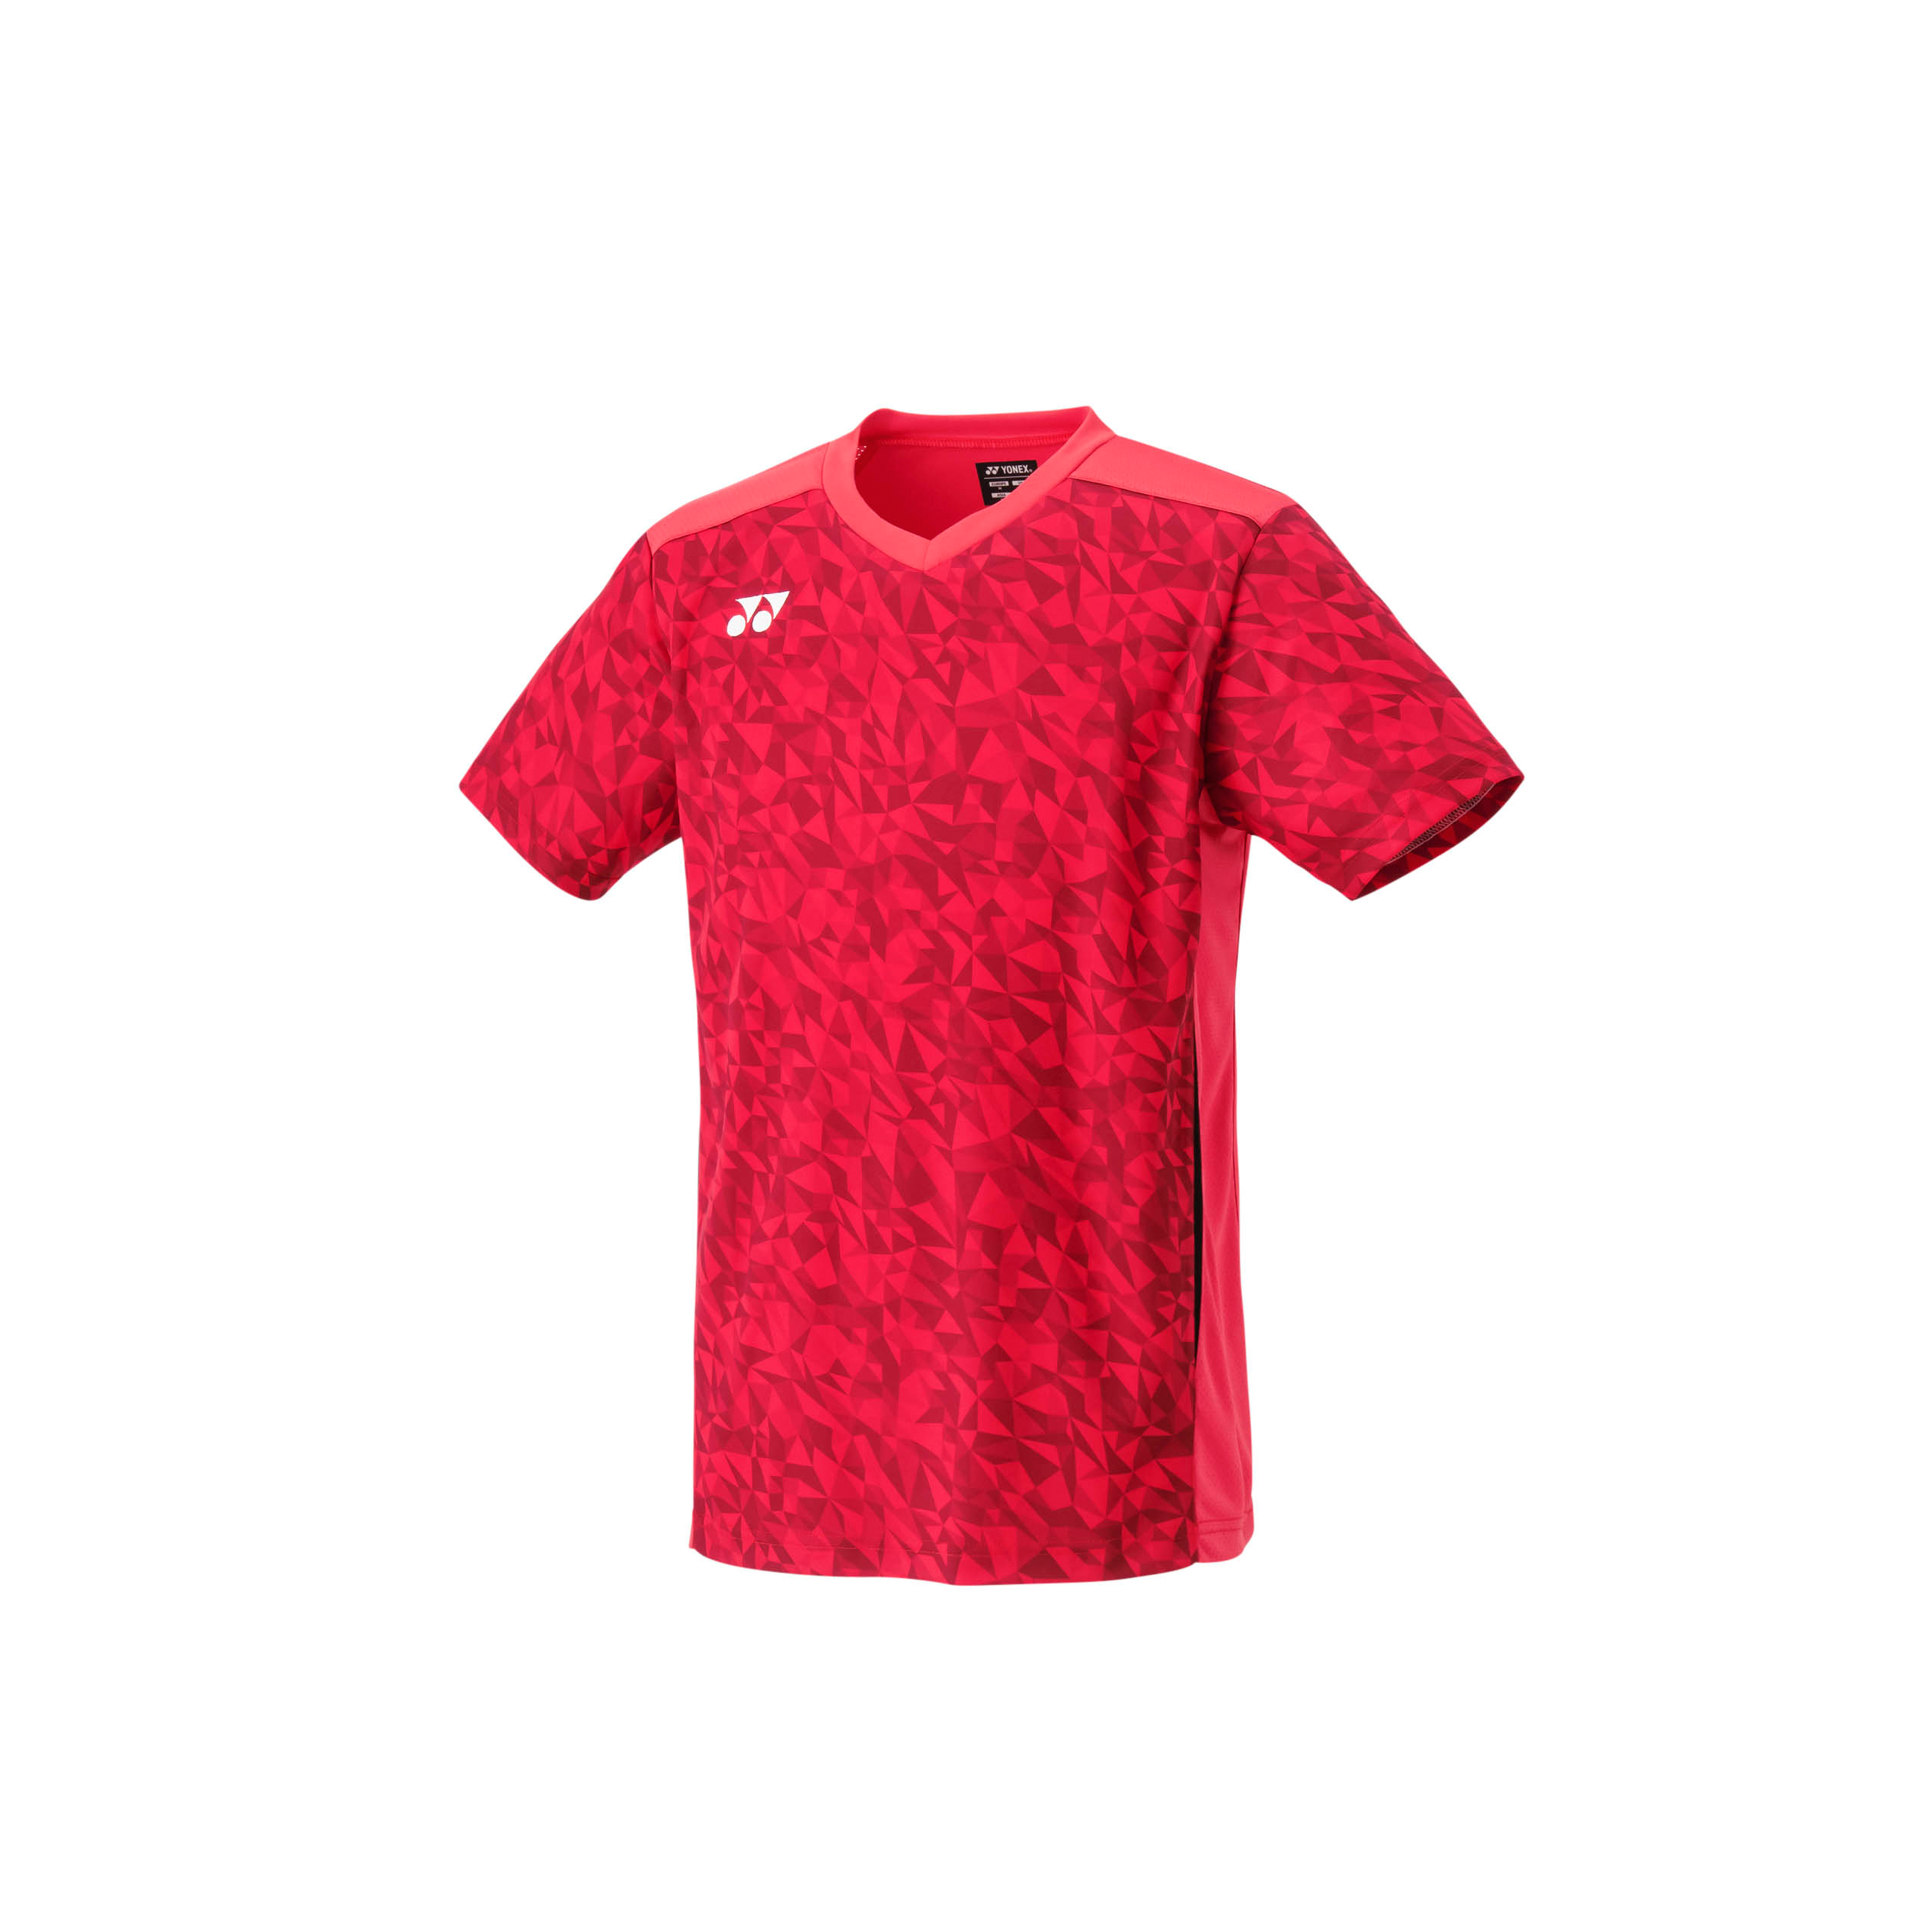 Yonex Japan National Badminton/ Sports Shirt 10555EX ShineRed MEN'S (Clearance)